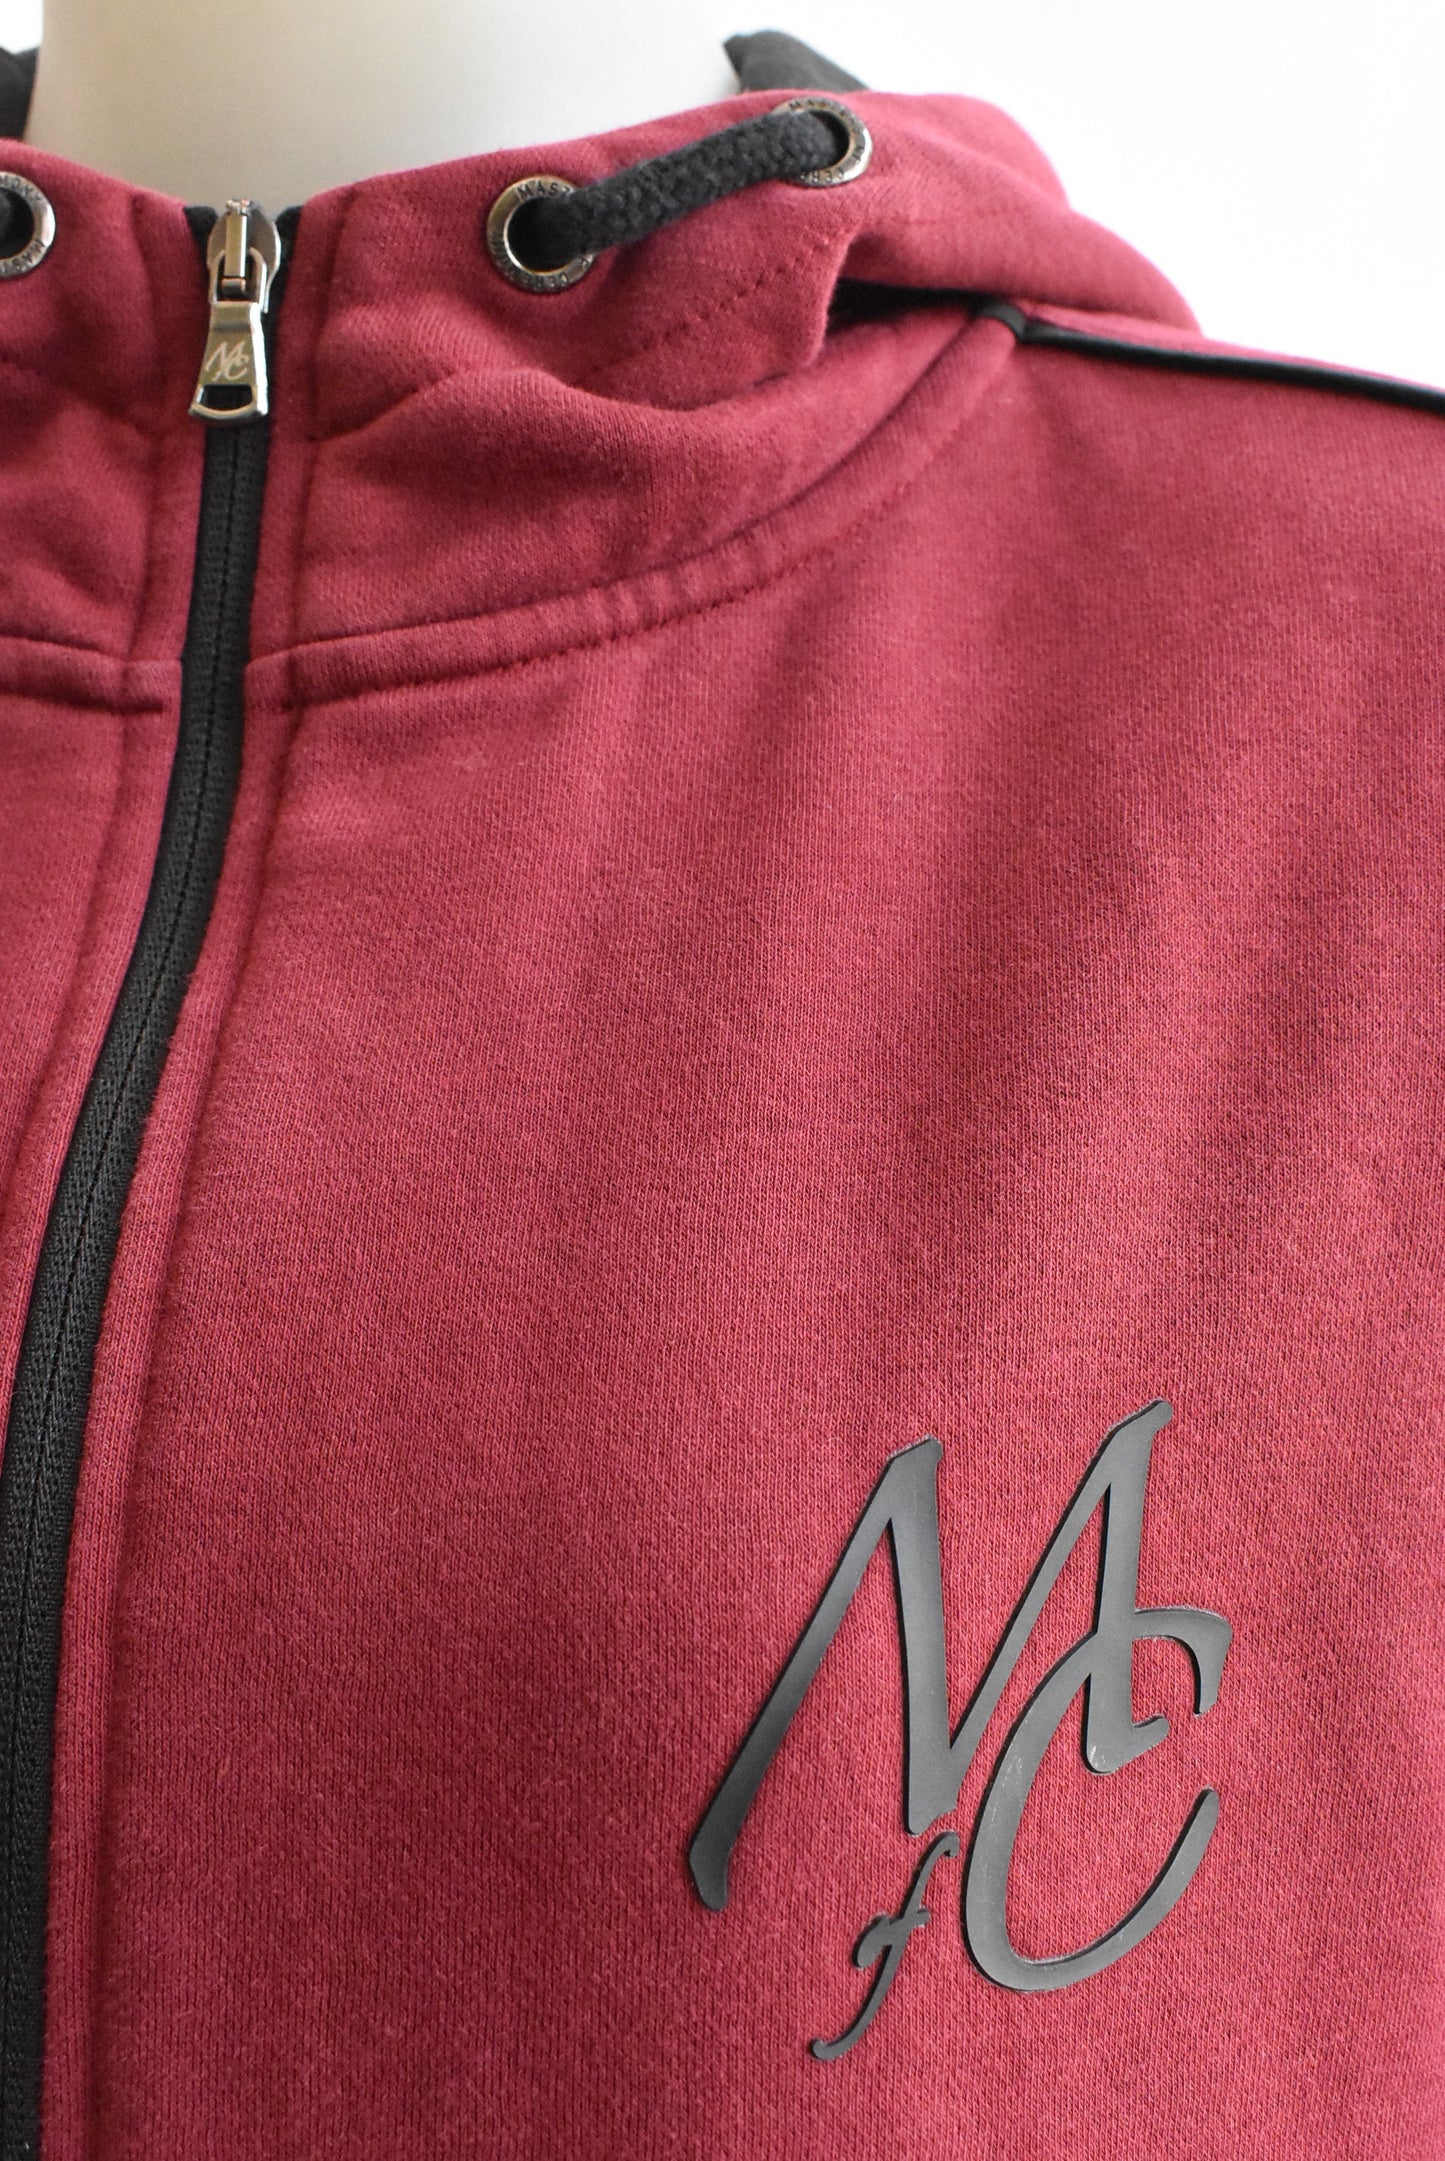 Masters of Ceremony burgundy zipper hoodie, size M